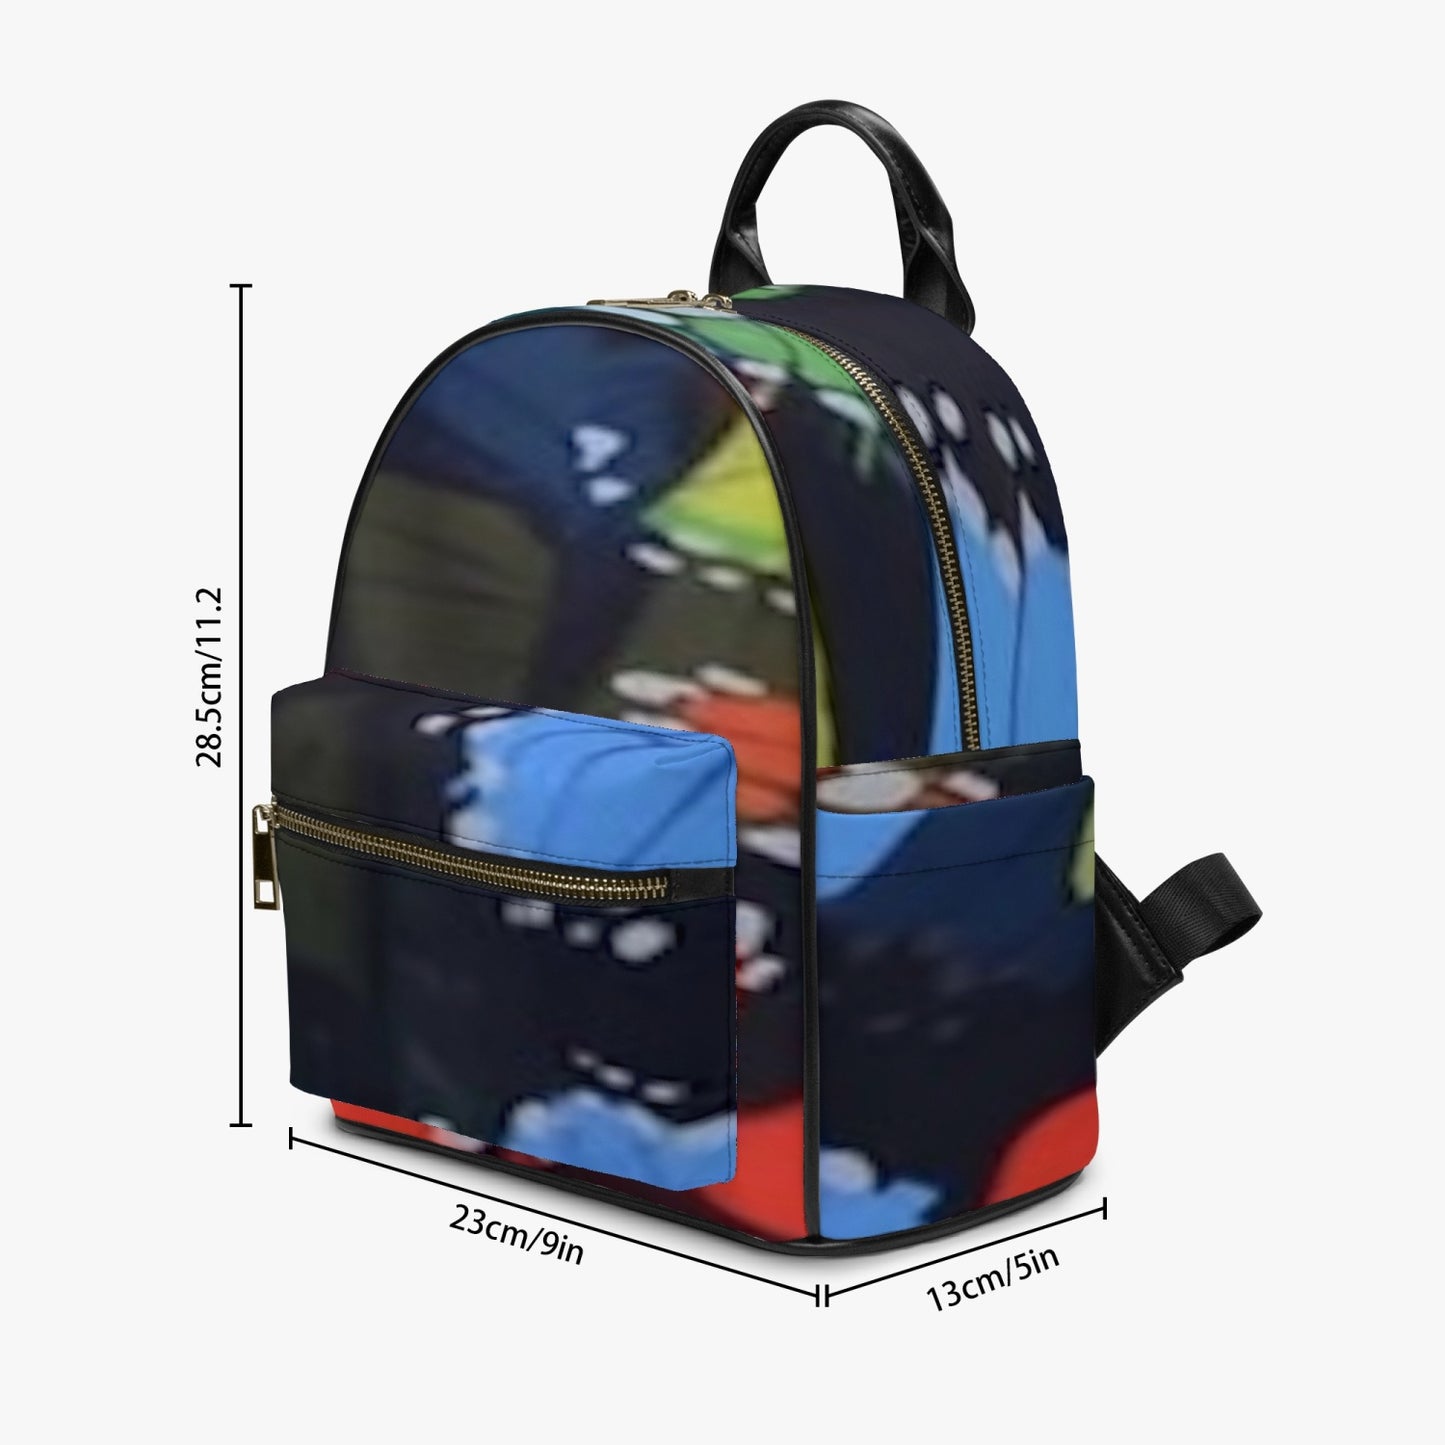 FZr Printed PU Backpack